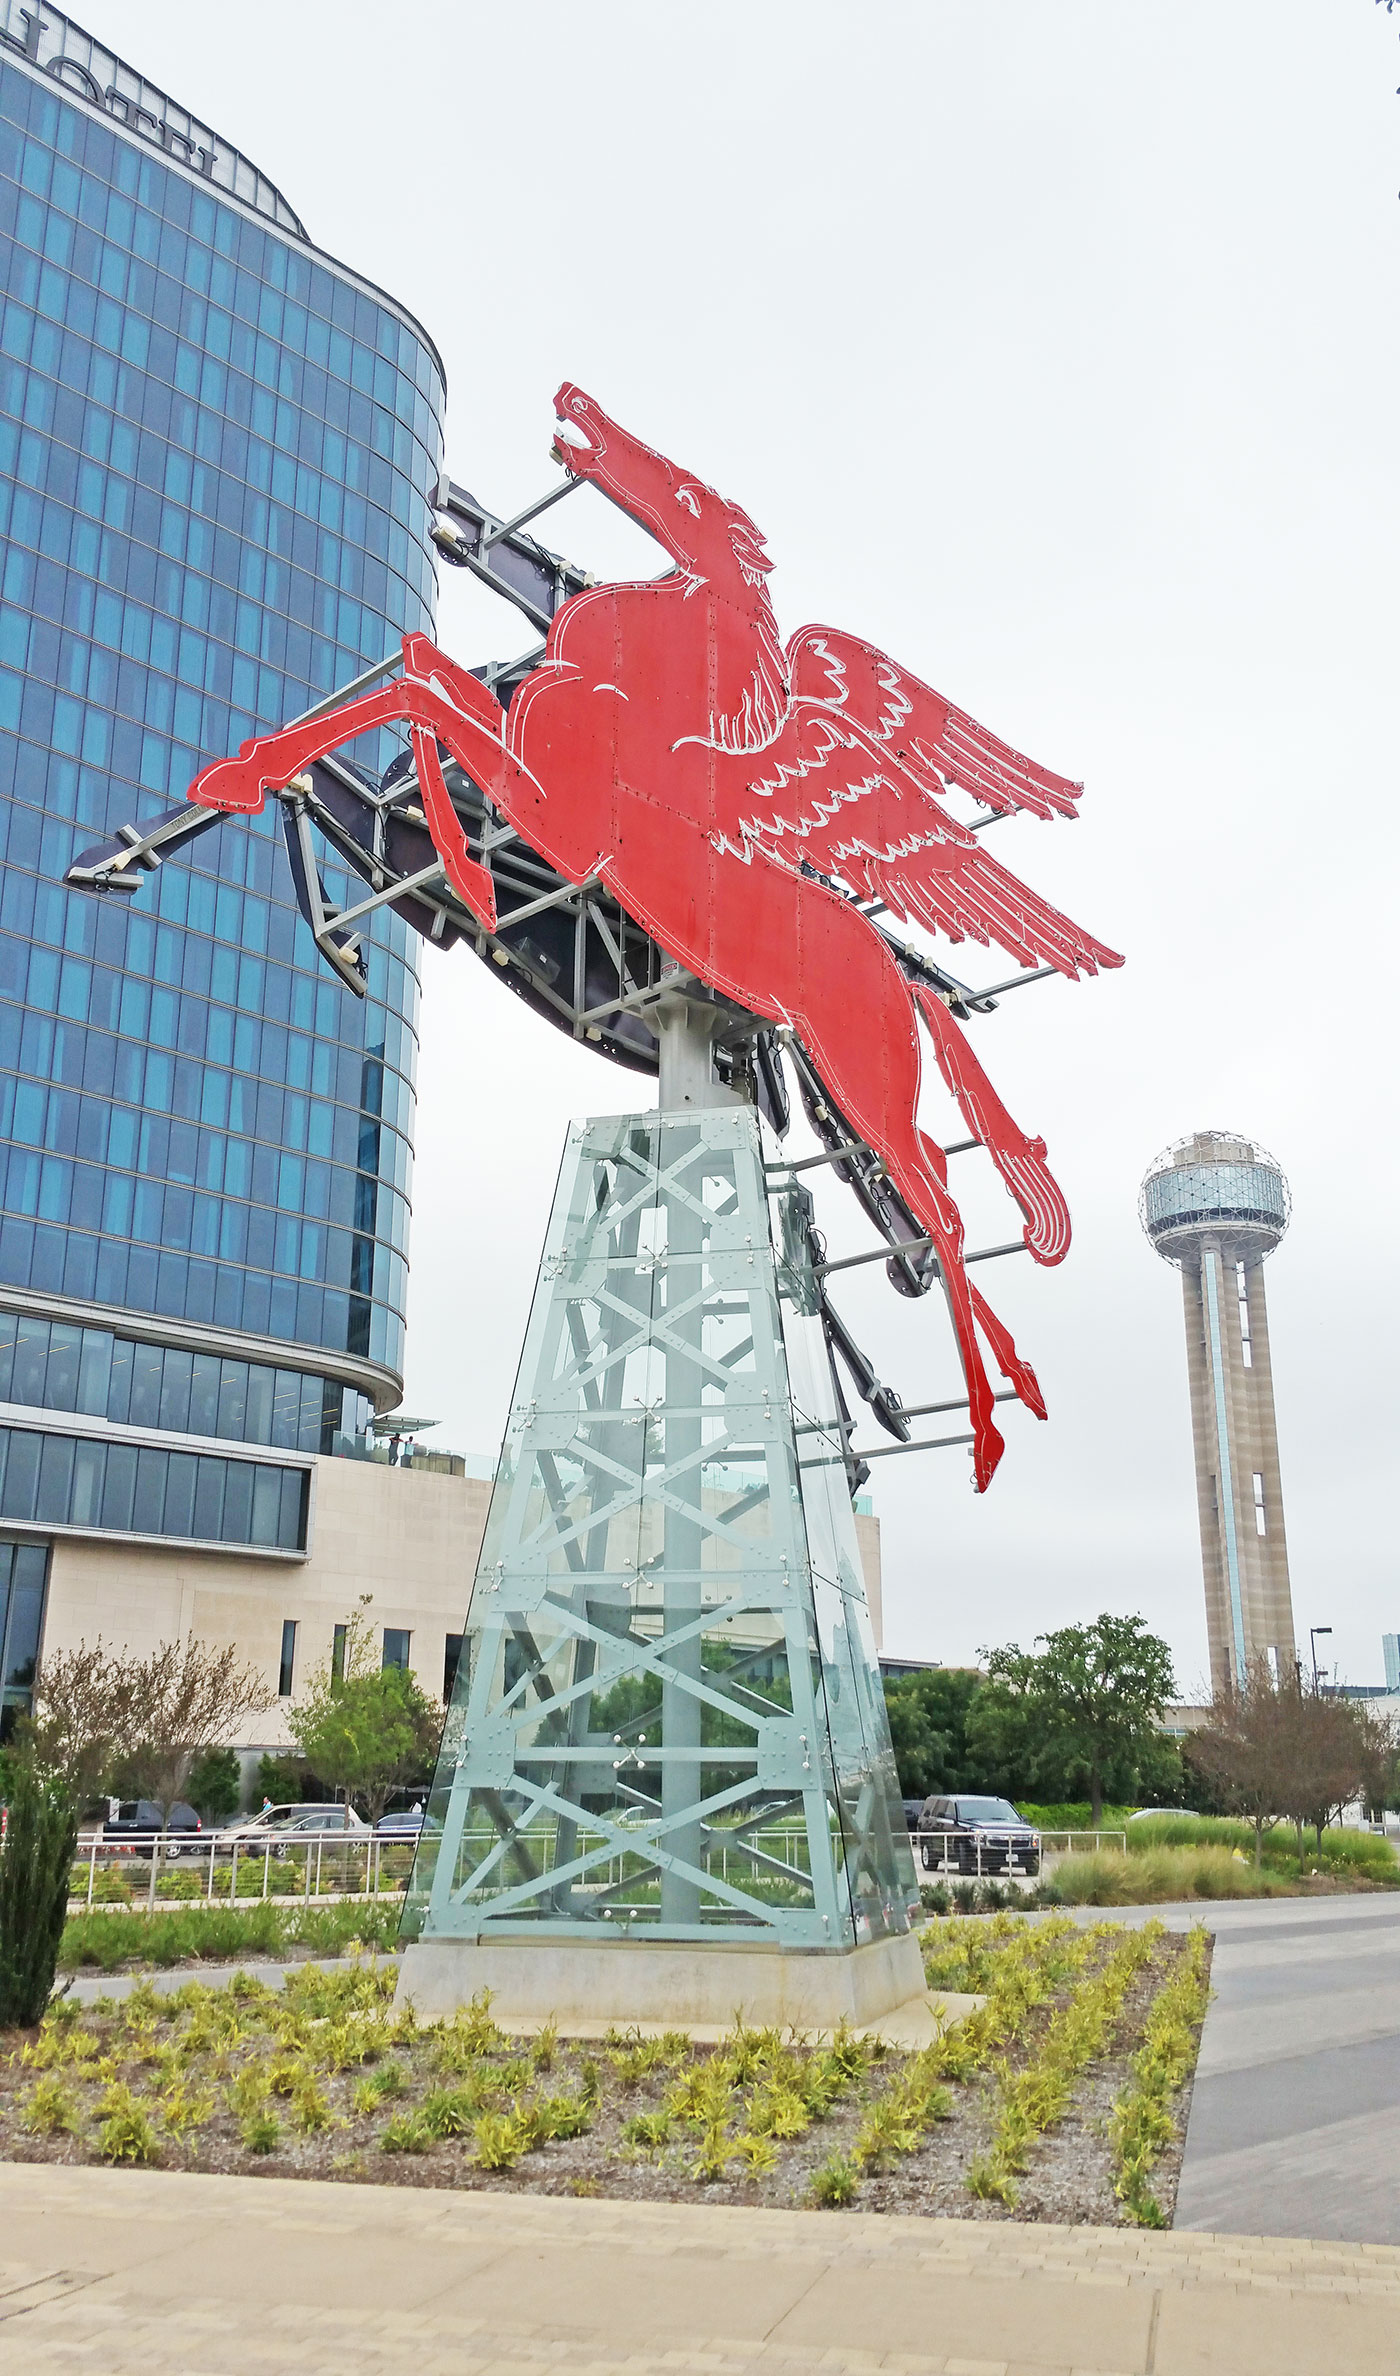 The Pegasus statute in front of the downtown Dallas Omni Hotel.